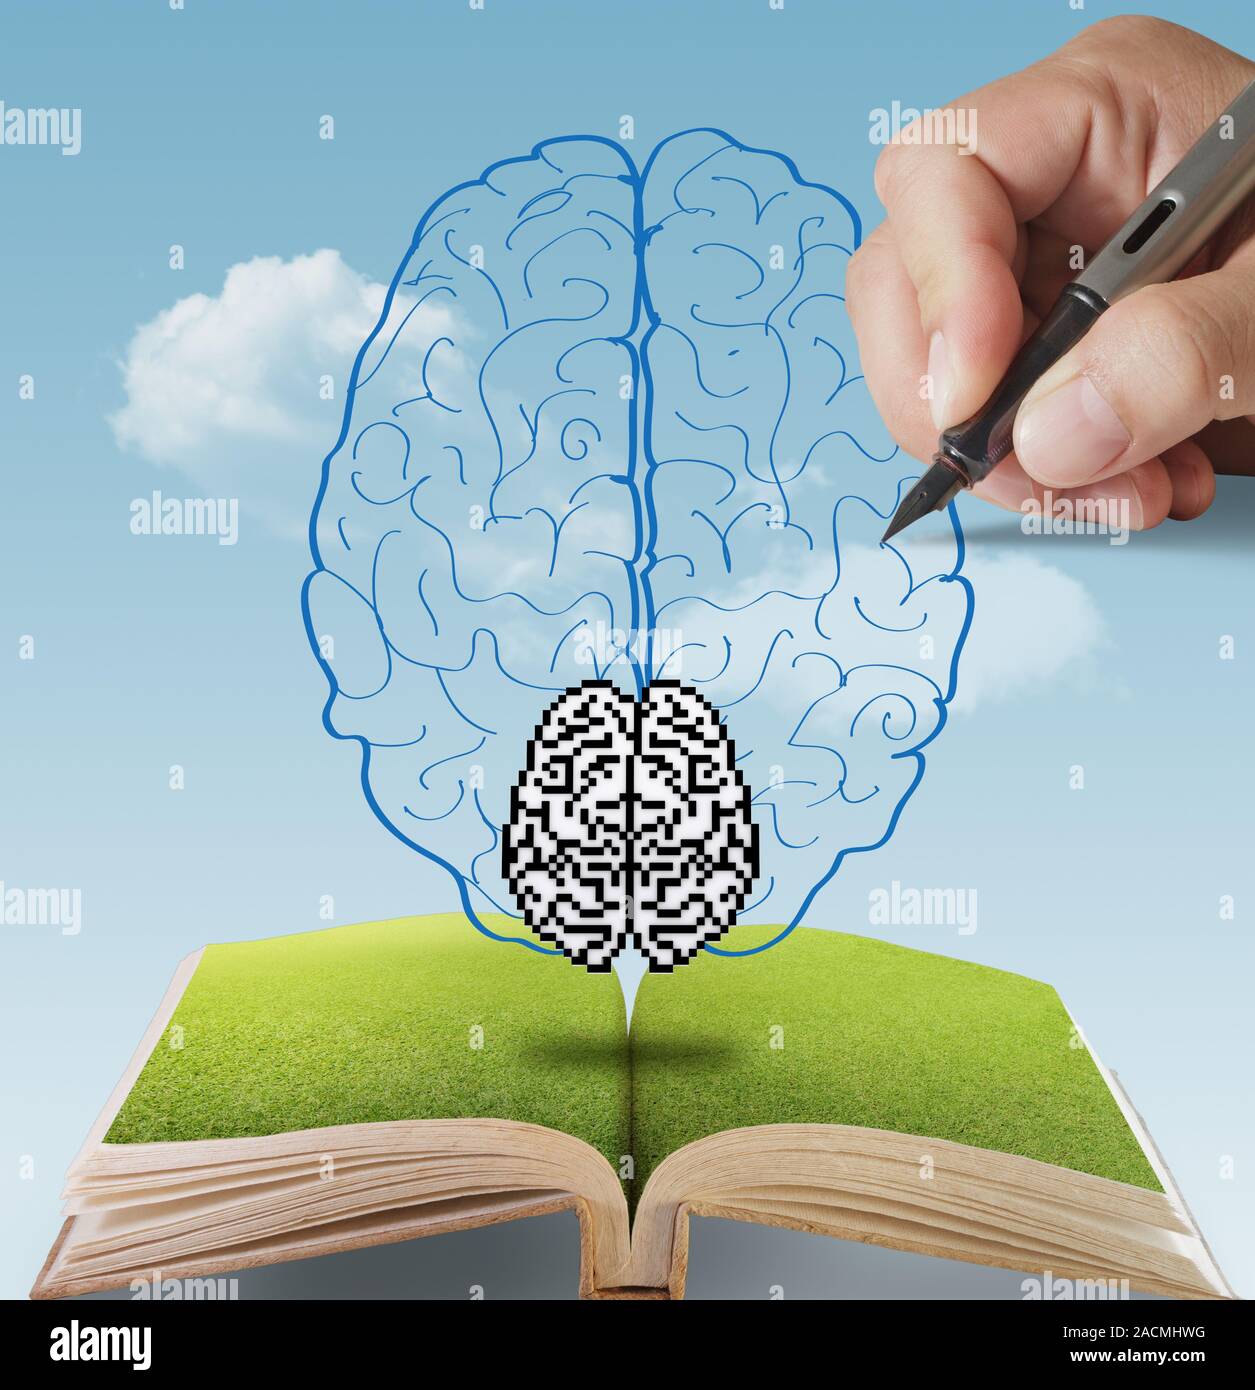 hand drawn pixel brain as concept Stock Photo